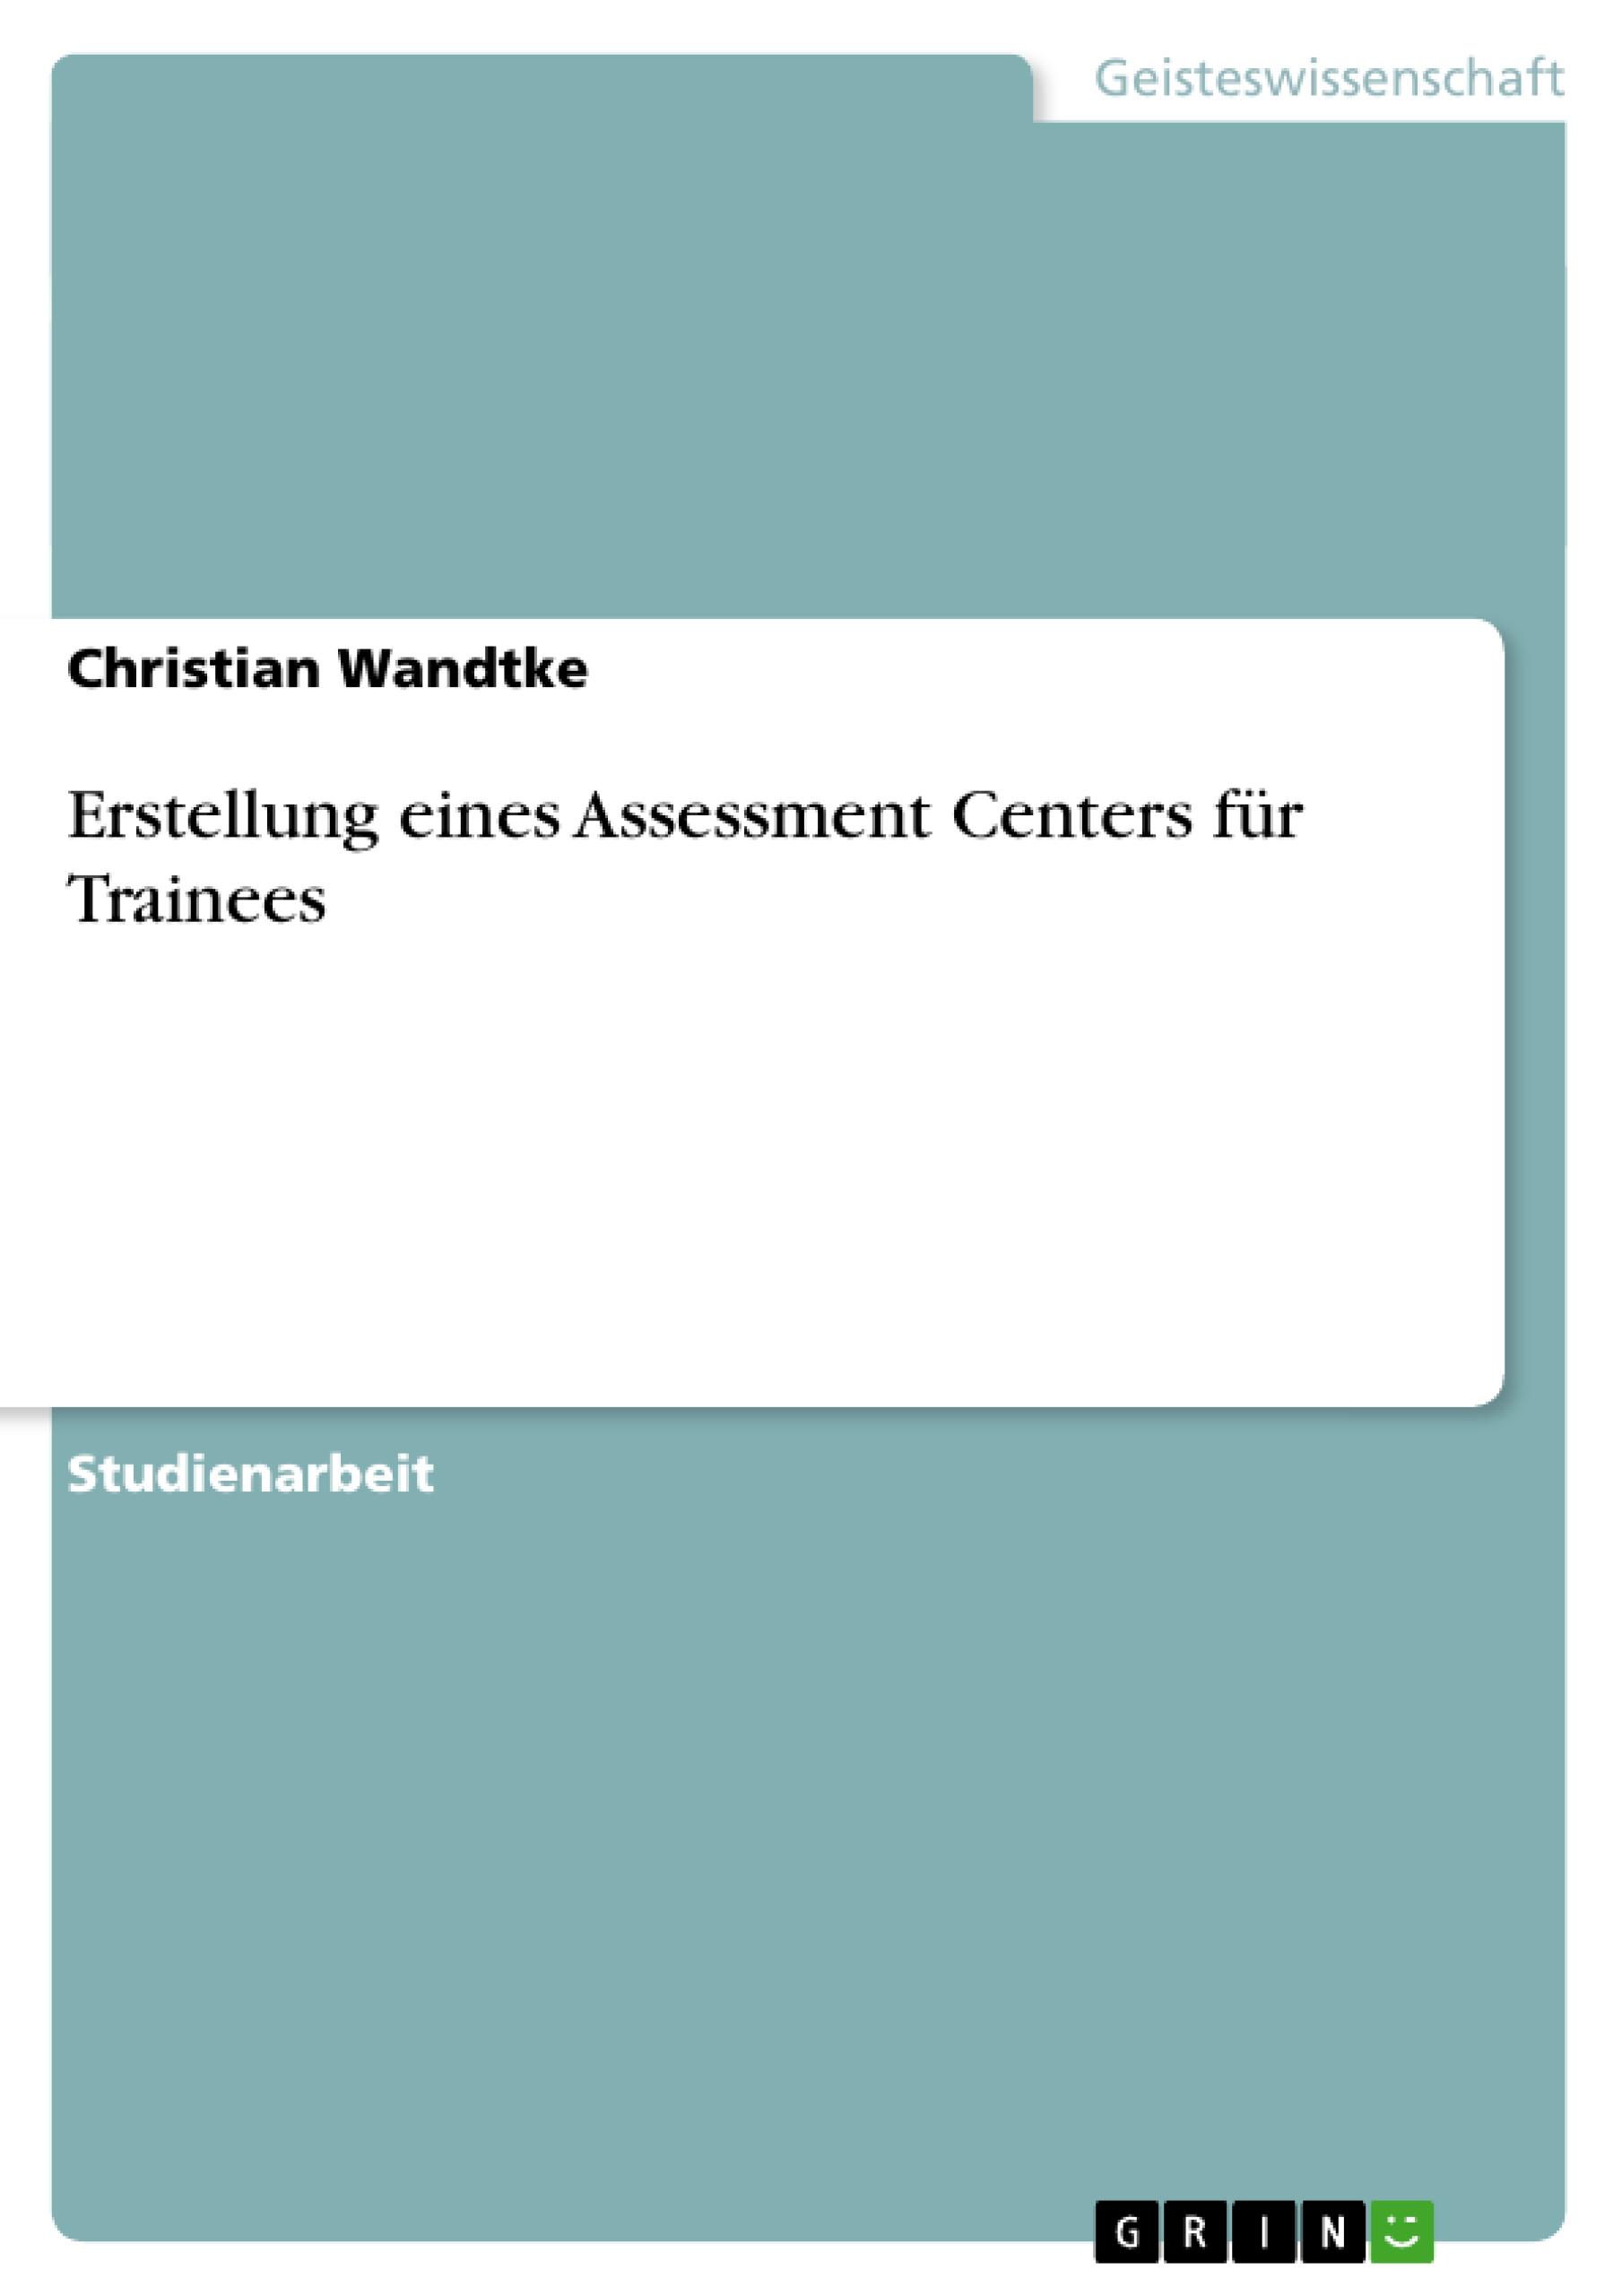 Erstellung eines Assessment Centers fuer Trainees - Wandtke, Christian